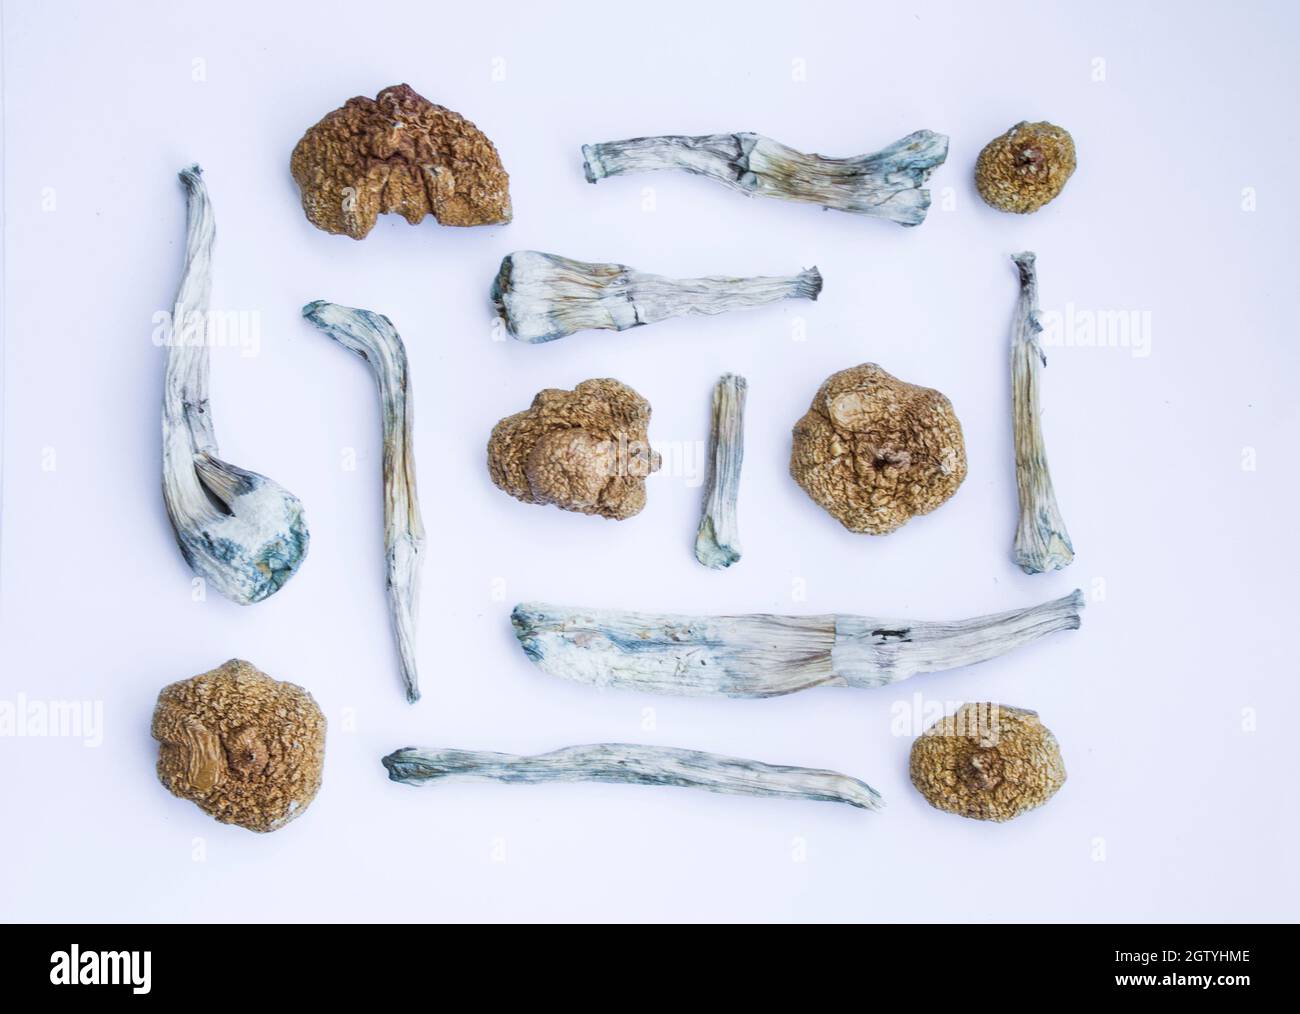 Dry Psilocybin Mushrooms On White Background. Hallucinogenic Psychedelic Shrooms. Stock Photo